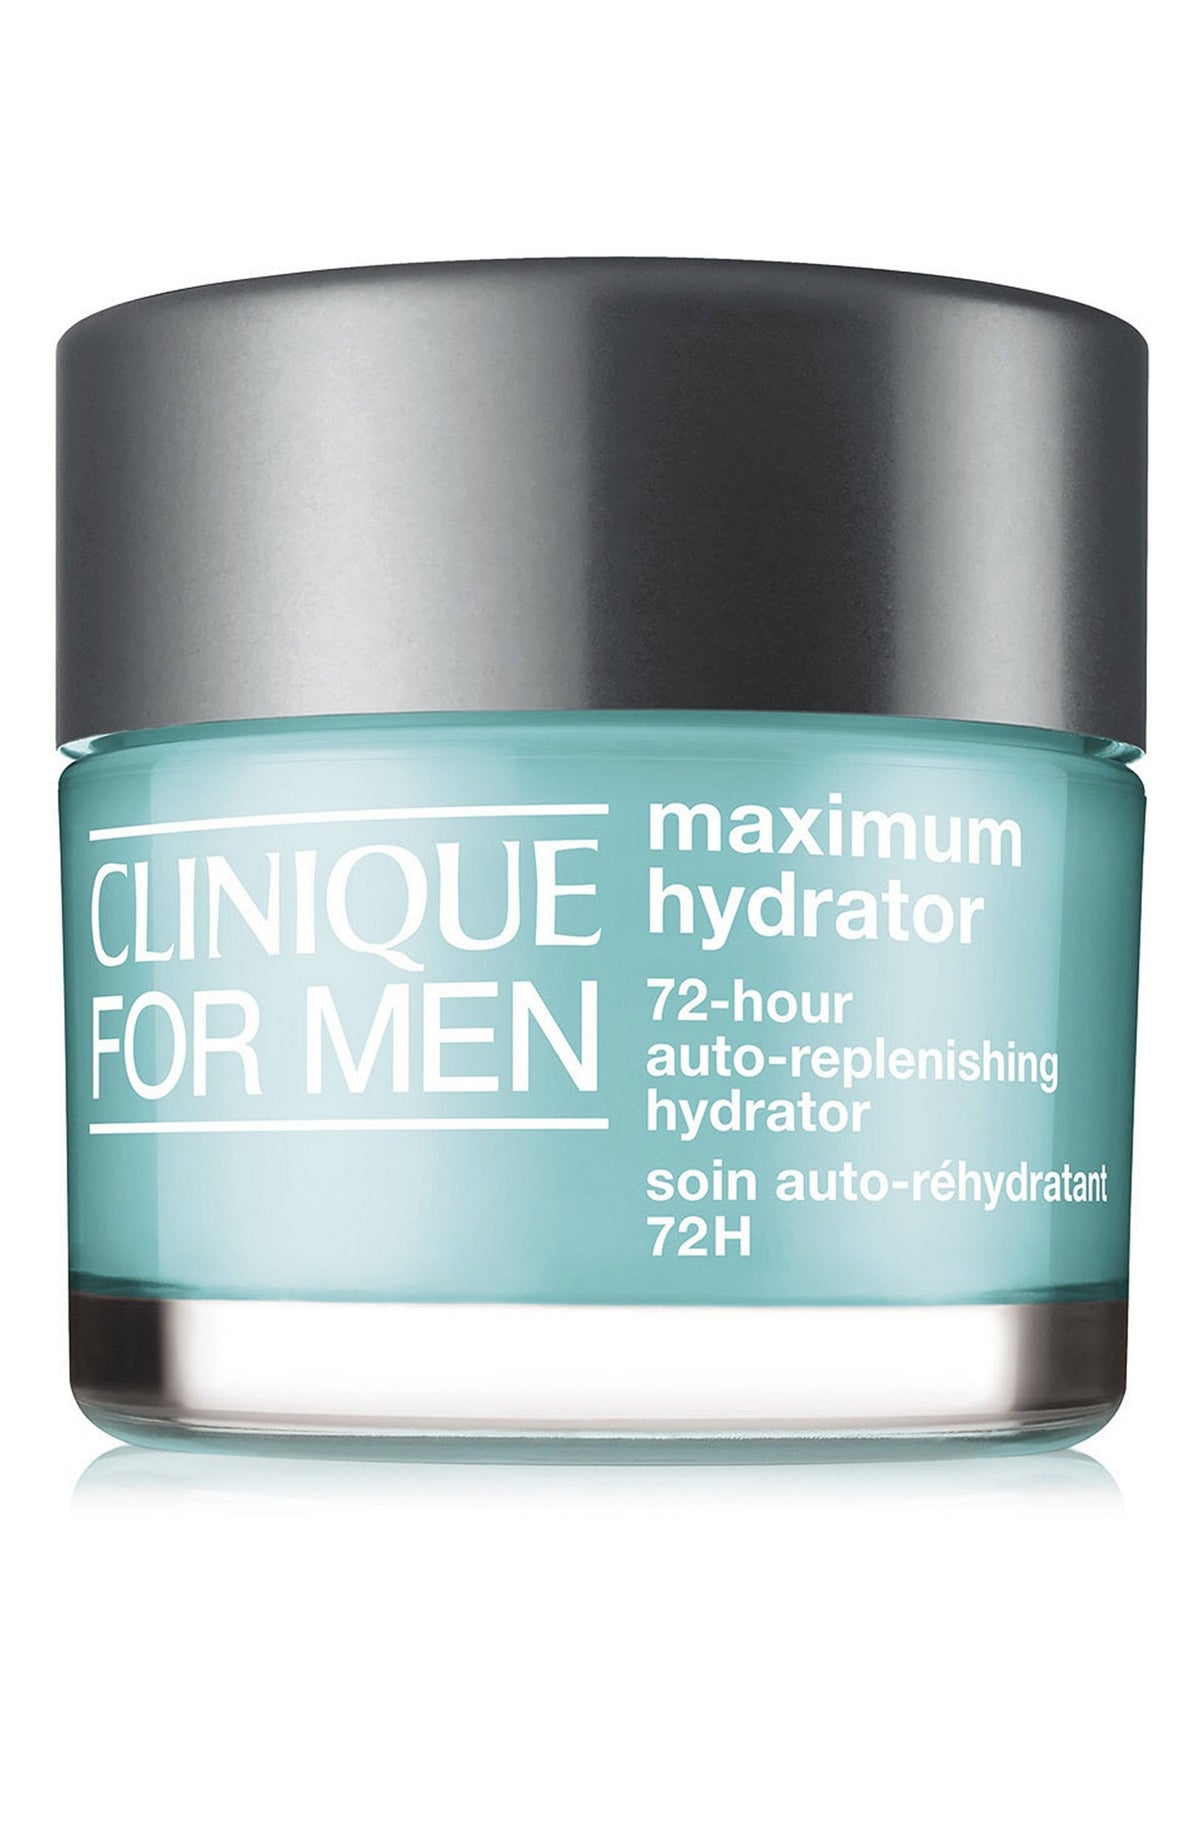 Clinique For Men Maximum Hydrator 72-Hour Auto-Replenishing Hydrator - eCosmeticWorld